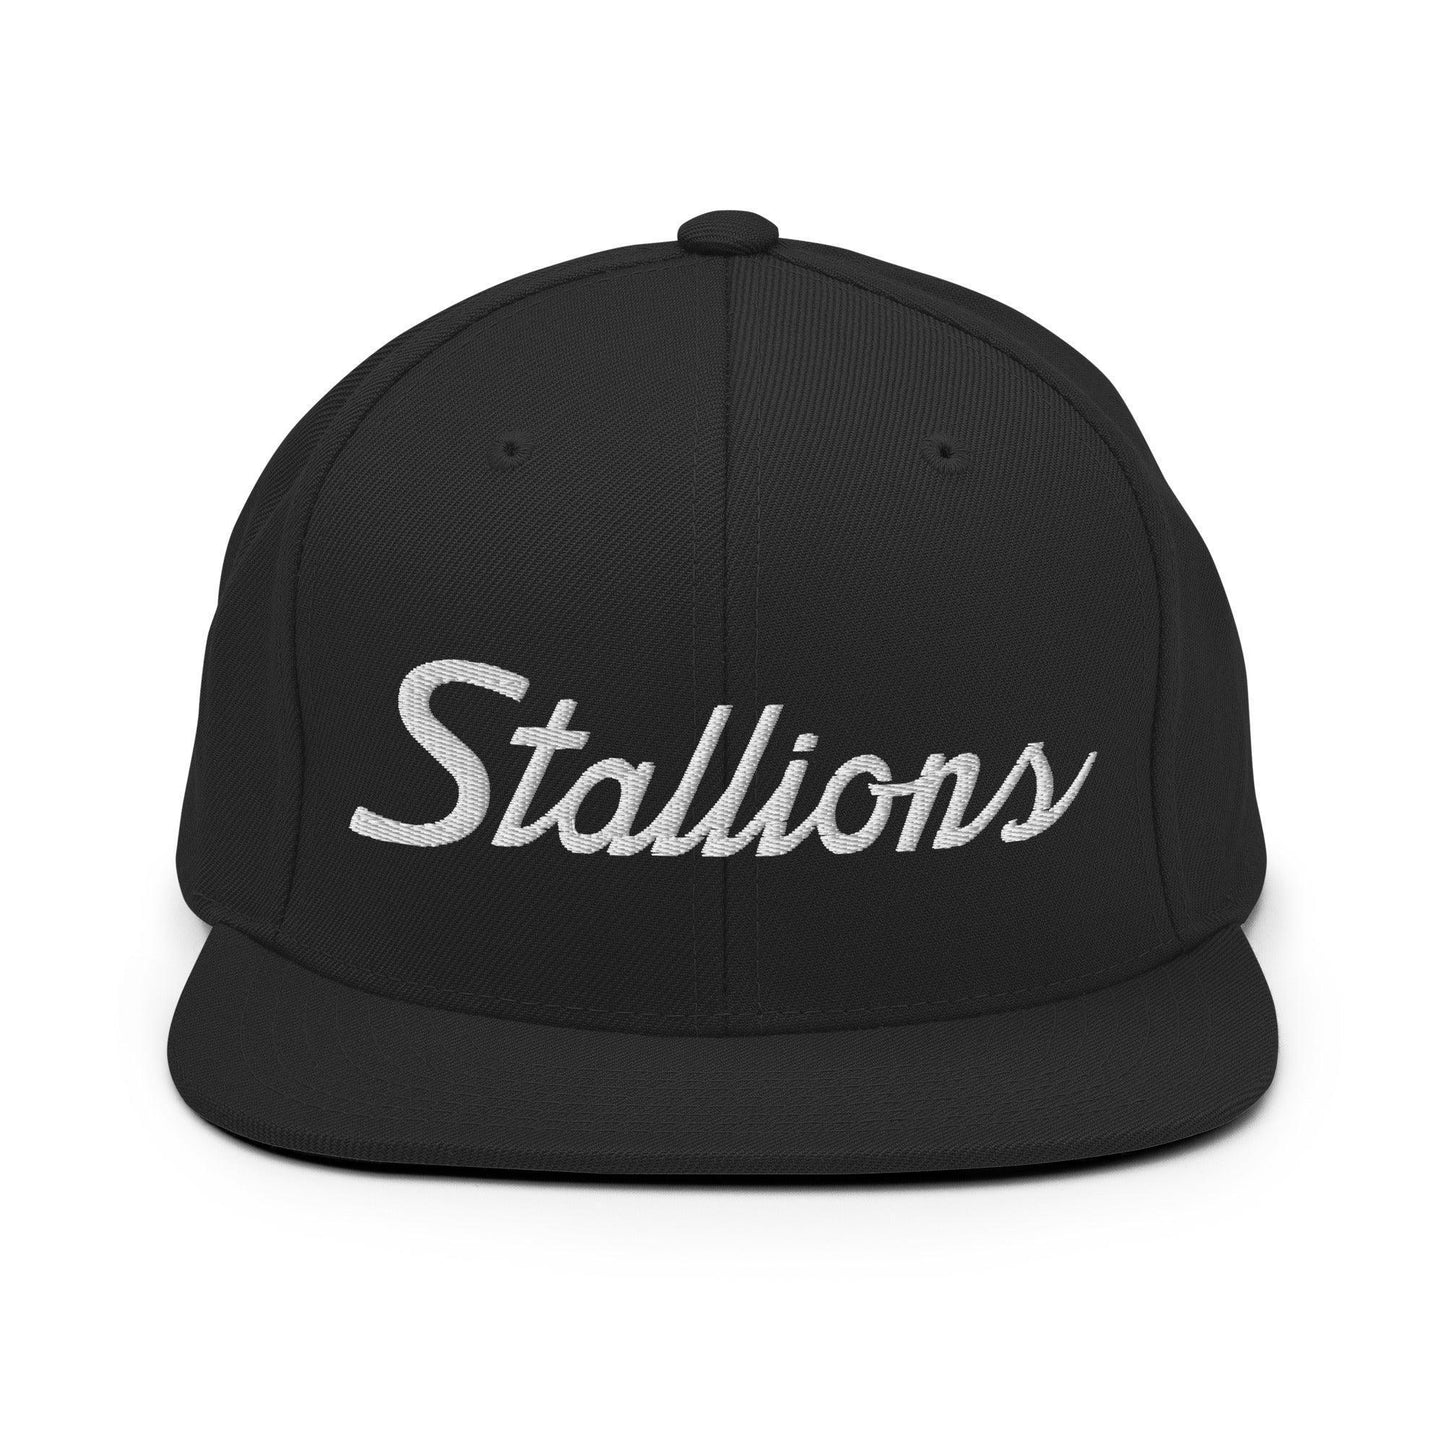 Stallions School Mascot Script Snapback Hat Black